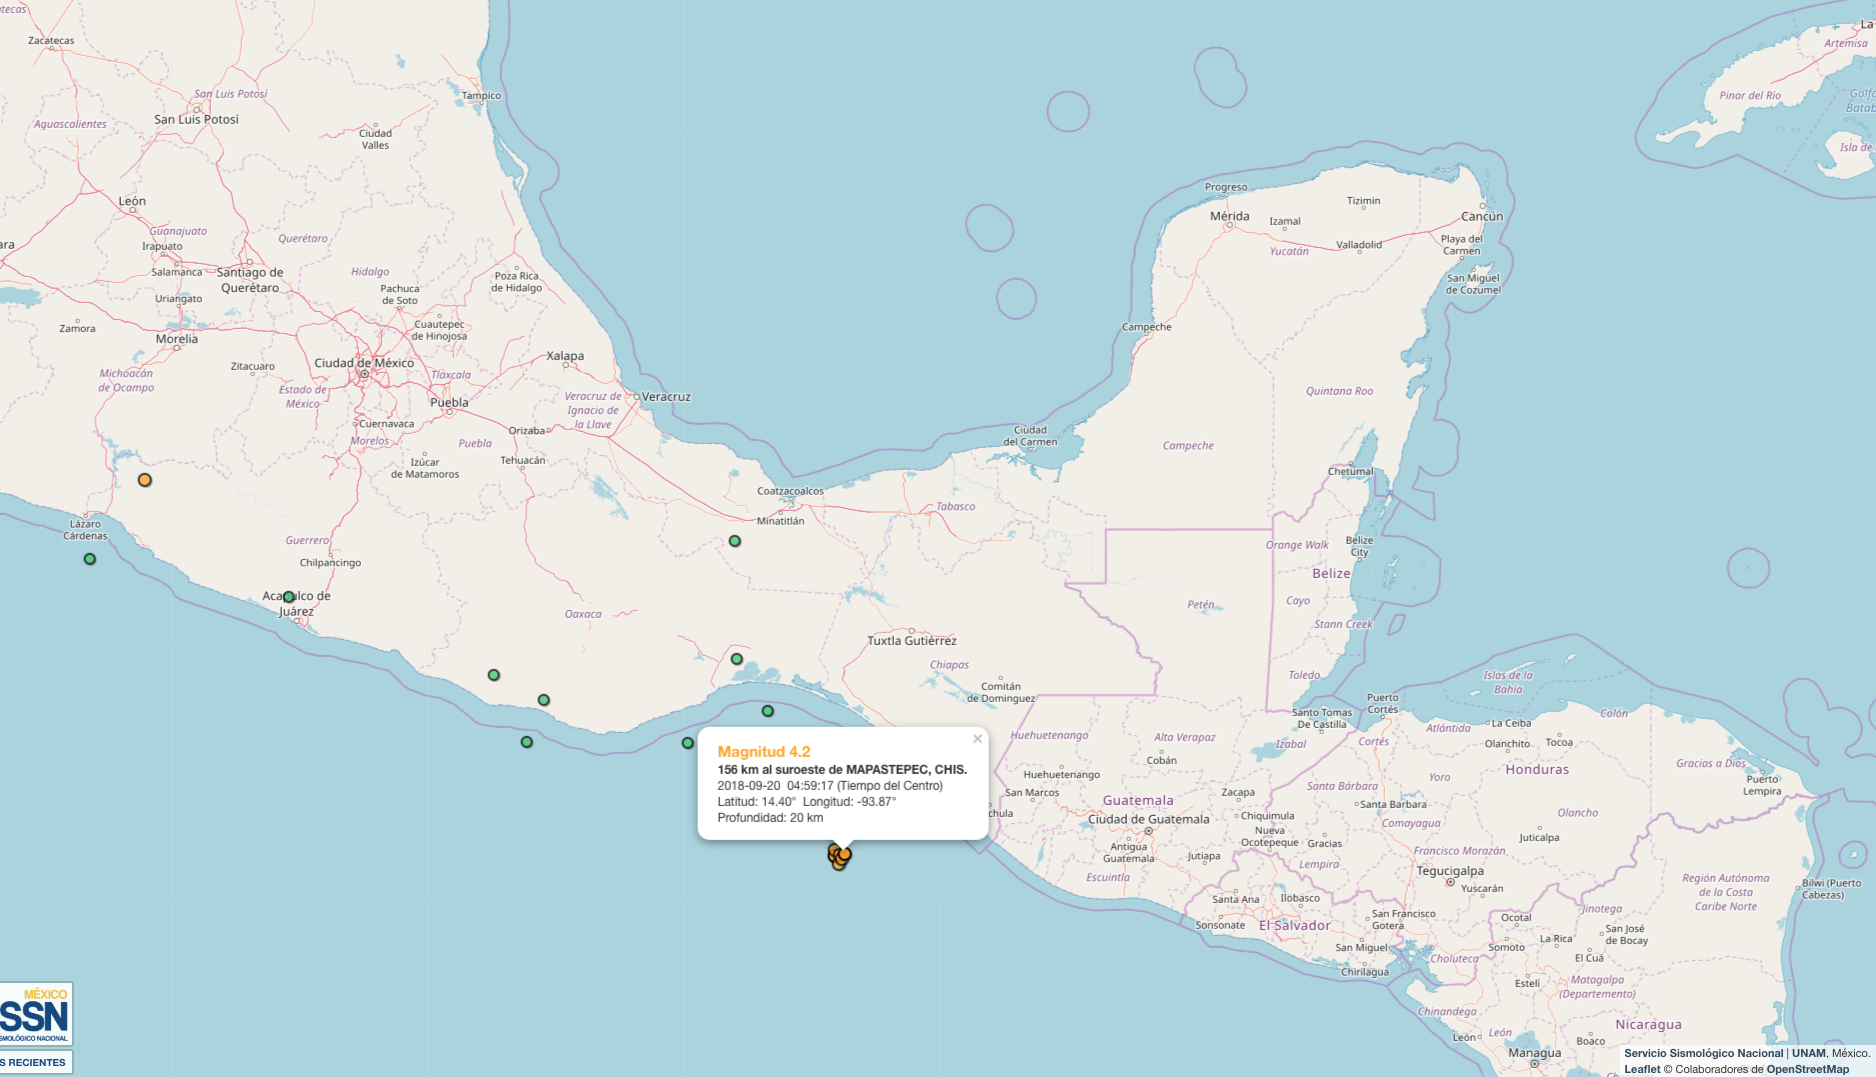 Sismológico Nacional registra 6 sismos en Chiapas